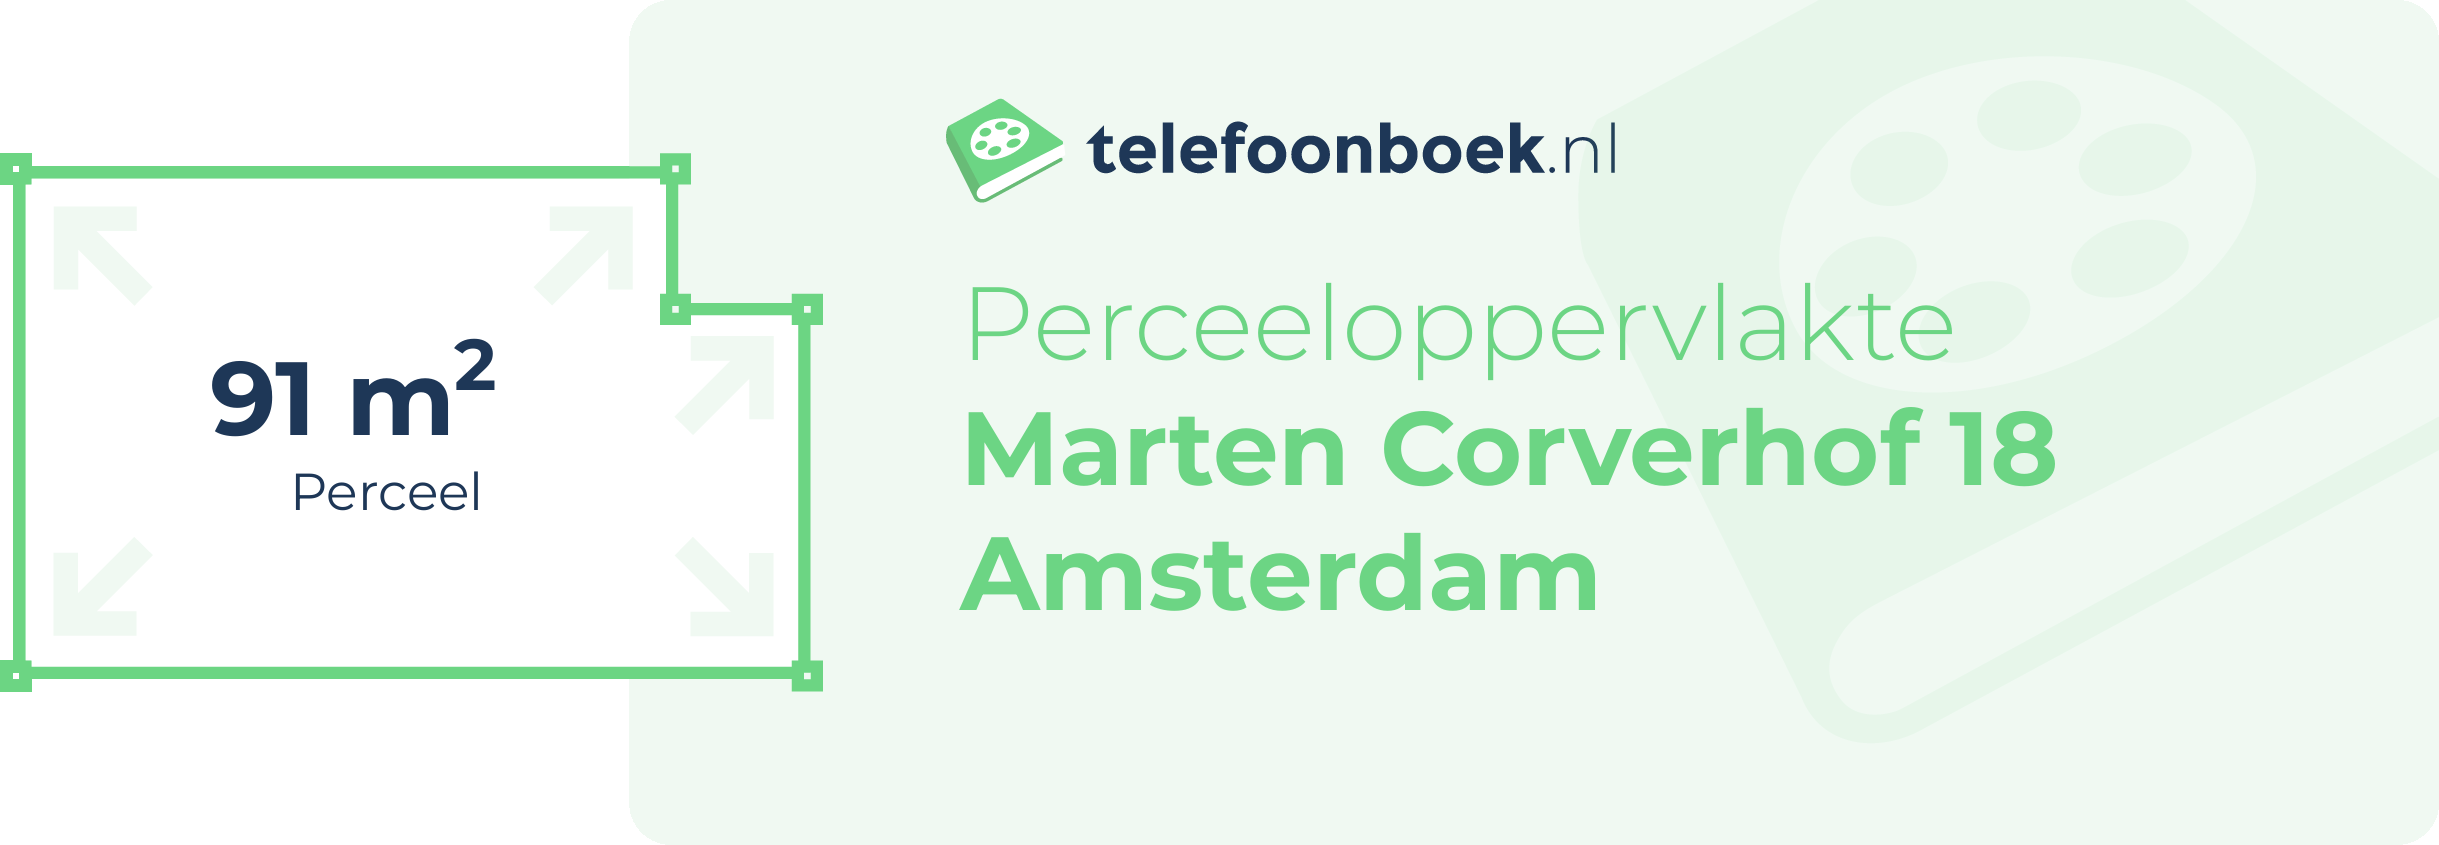 Perceeloppervlakte Marten Corverhof 18 Amsterdam